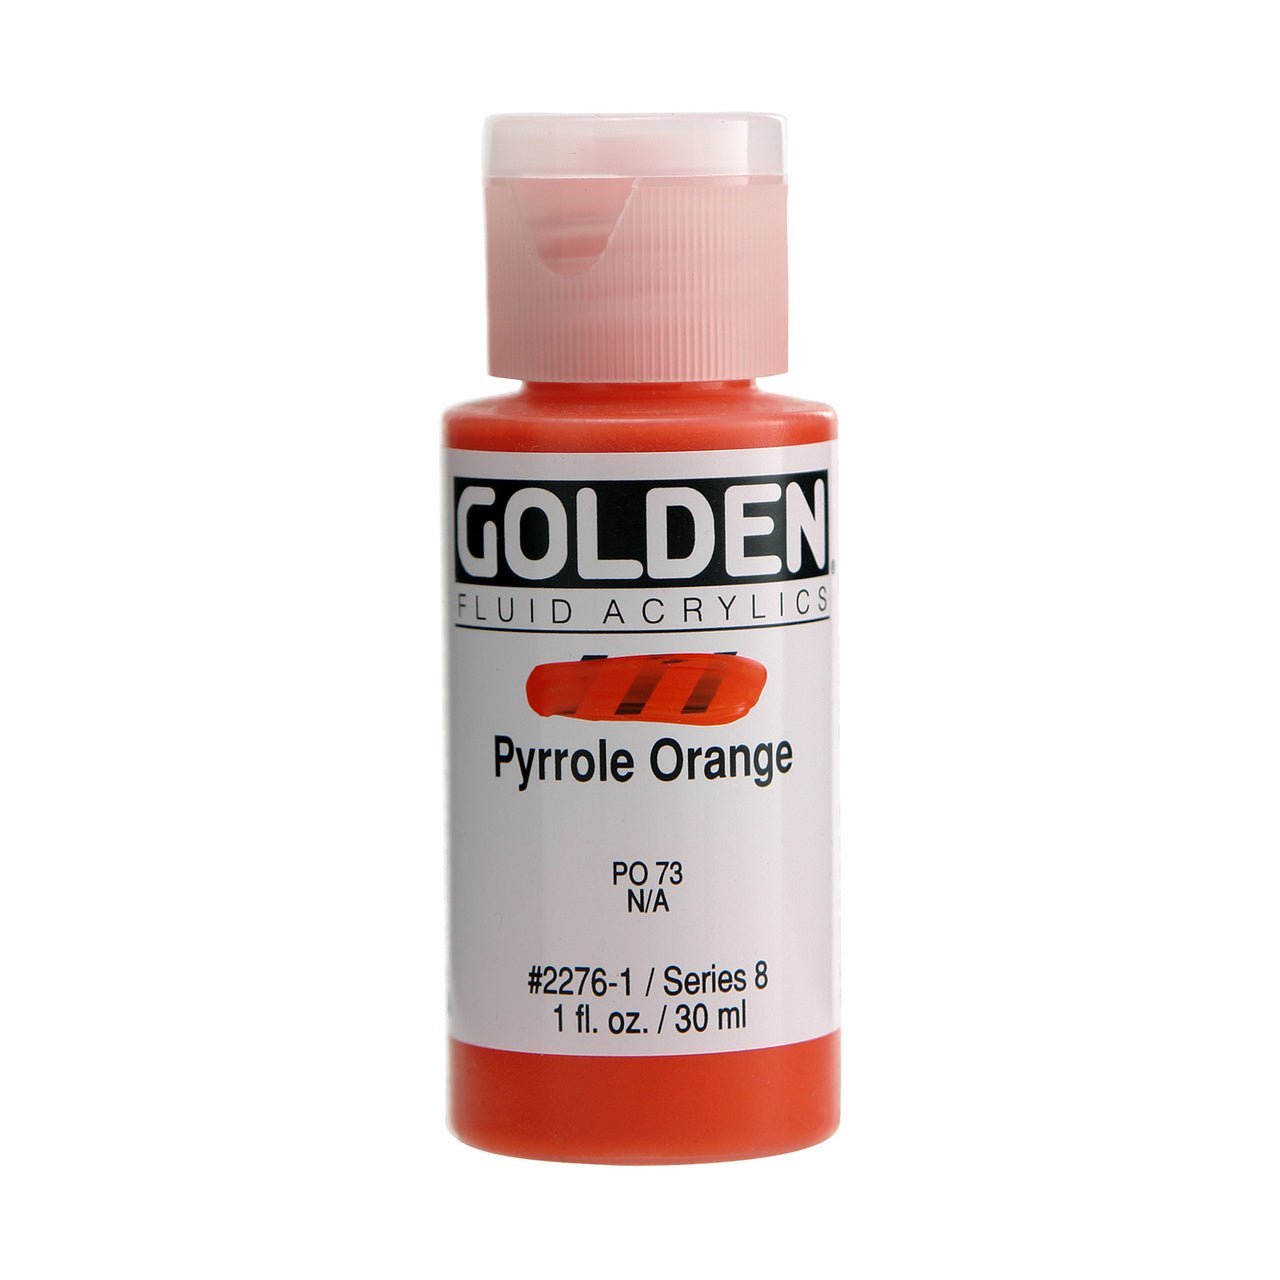 Golden Fluid Acrylic Pyrrole Orange 1 oz - merriartist.com